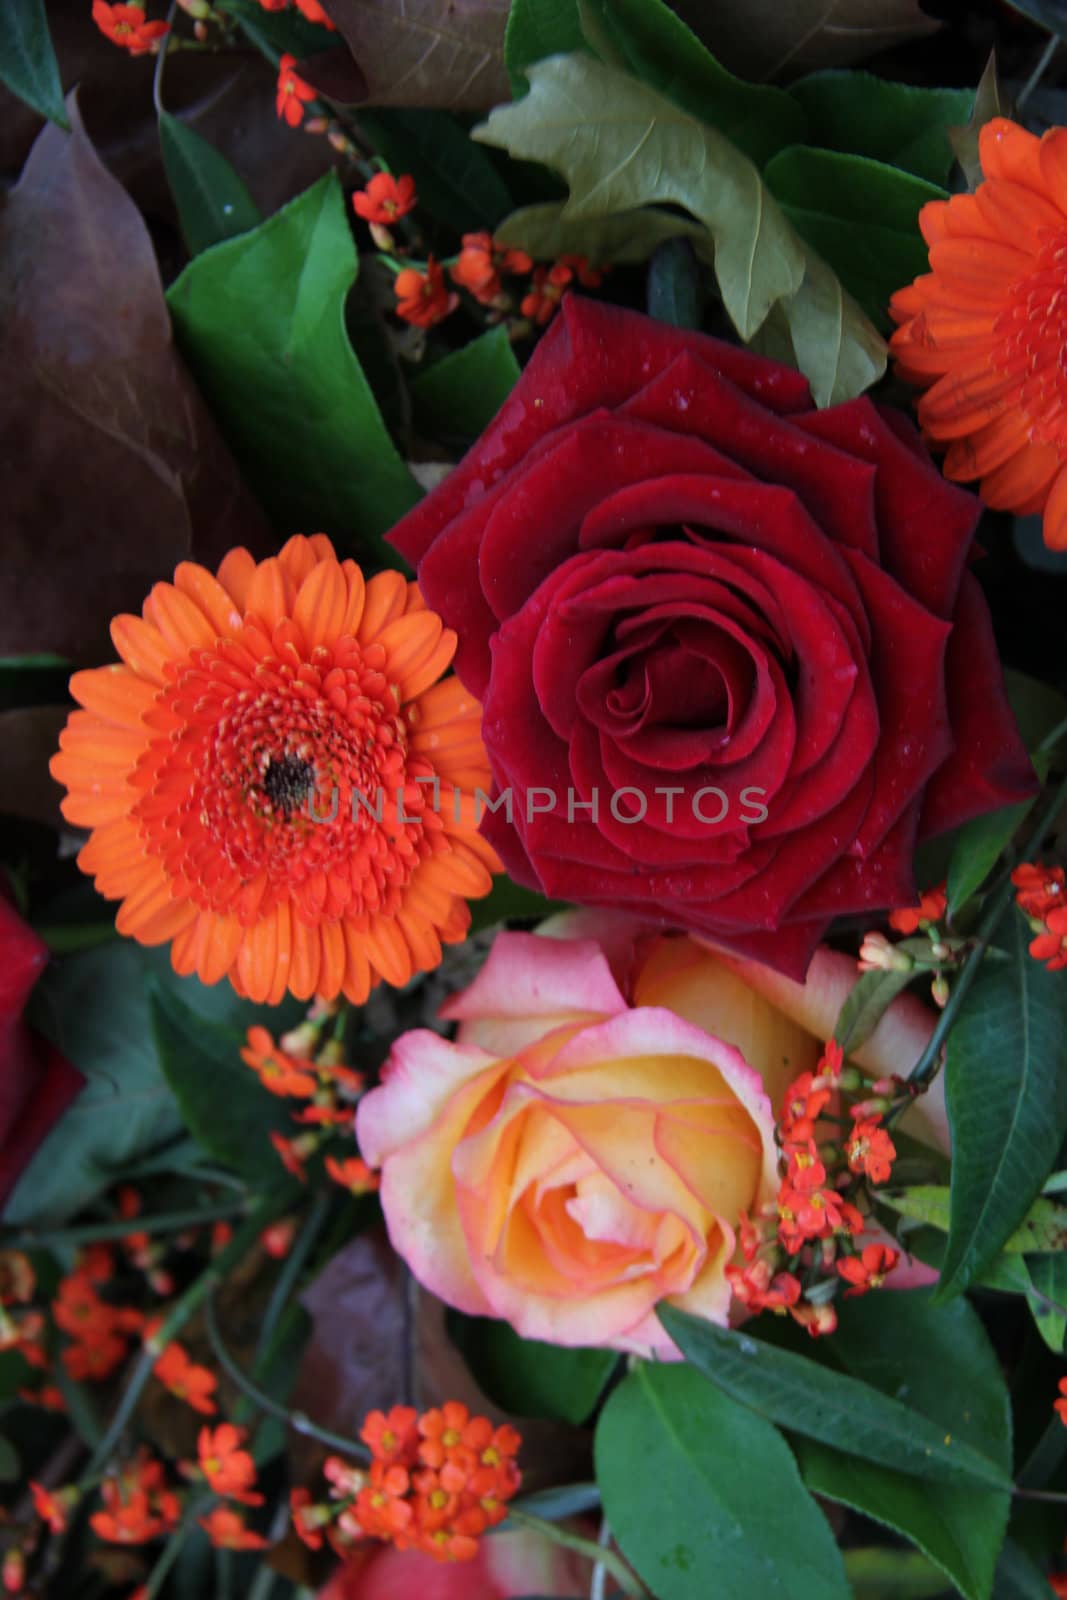 Flower arrangement in autumn colors by studioportosabbia